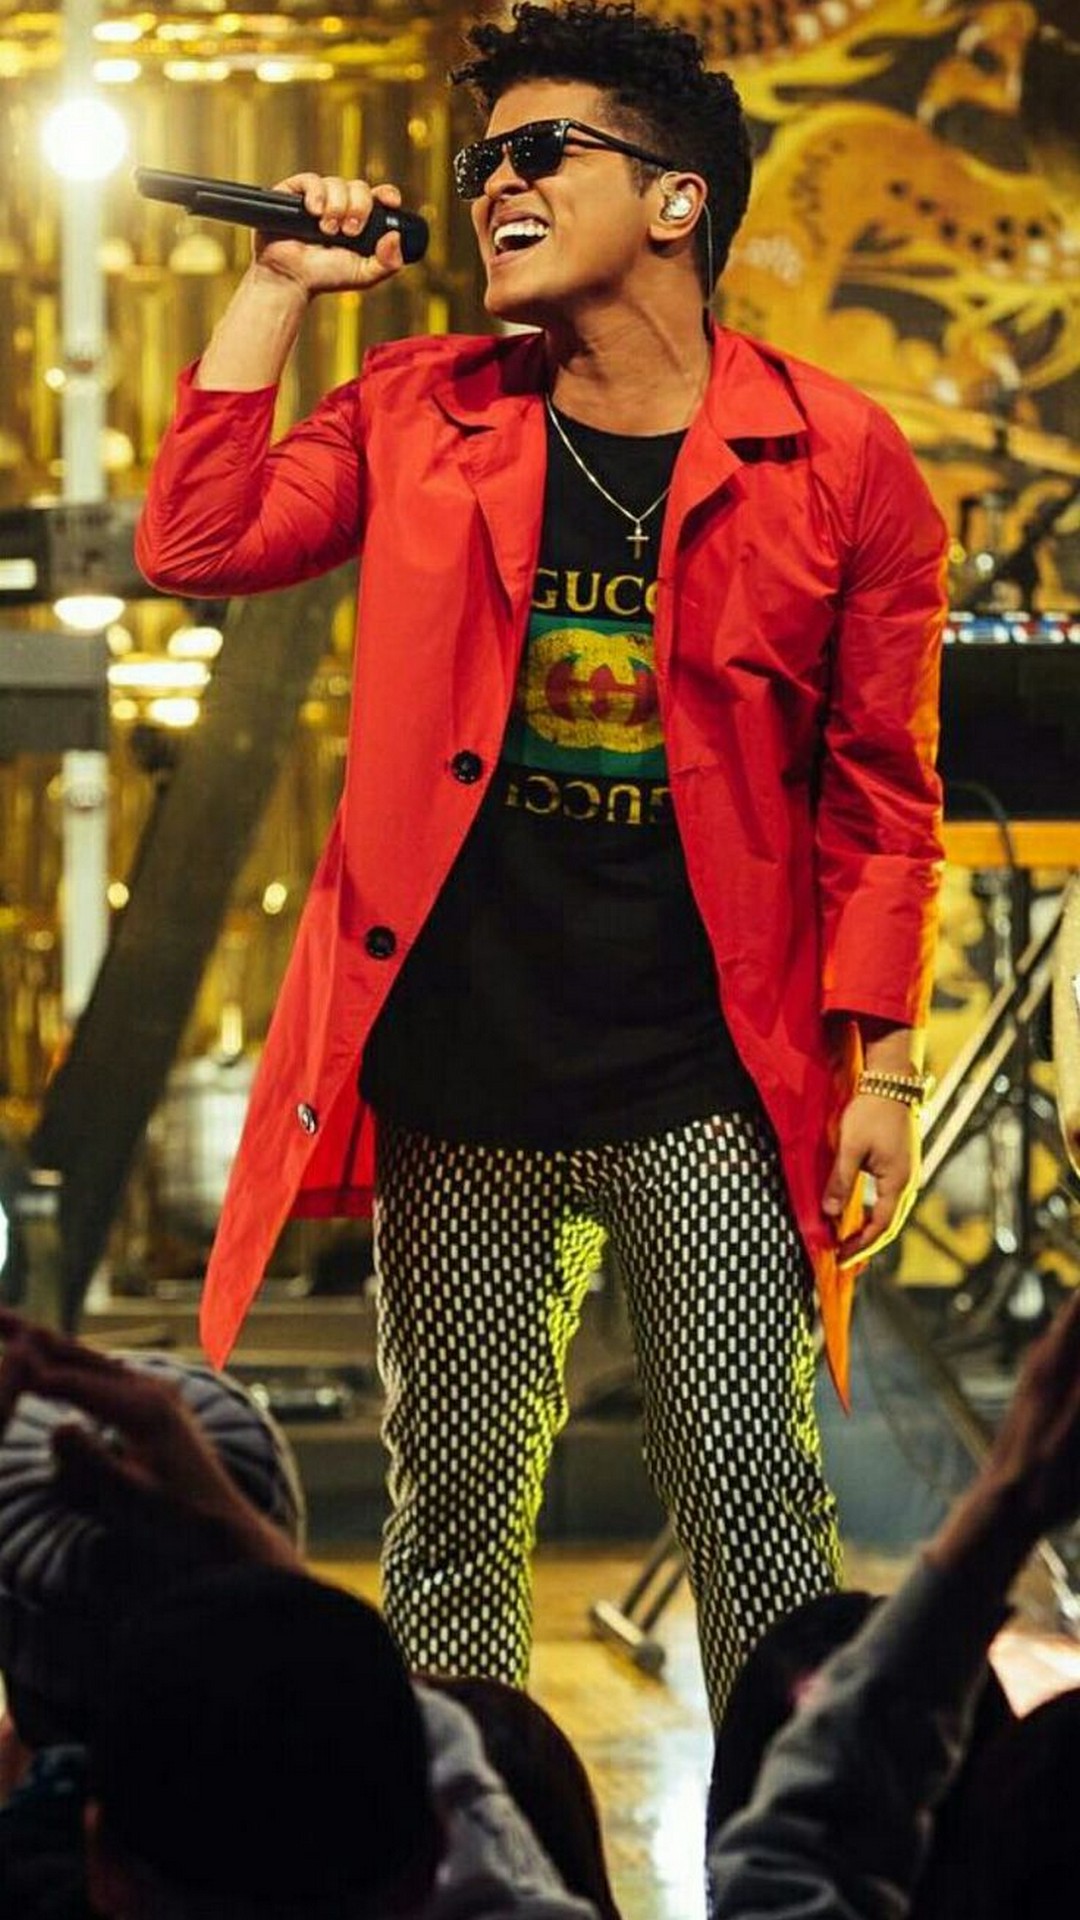 Bruno Mars Concert iPhone Wallpaper resolution 1080x1920